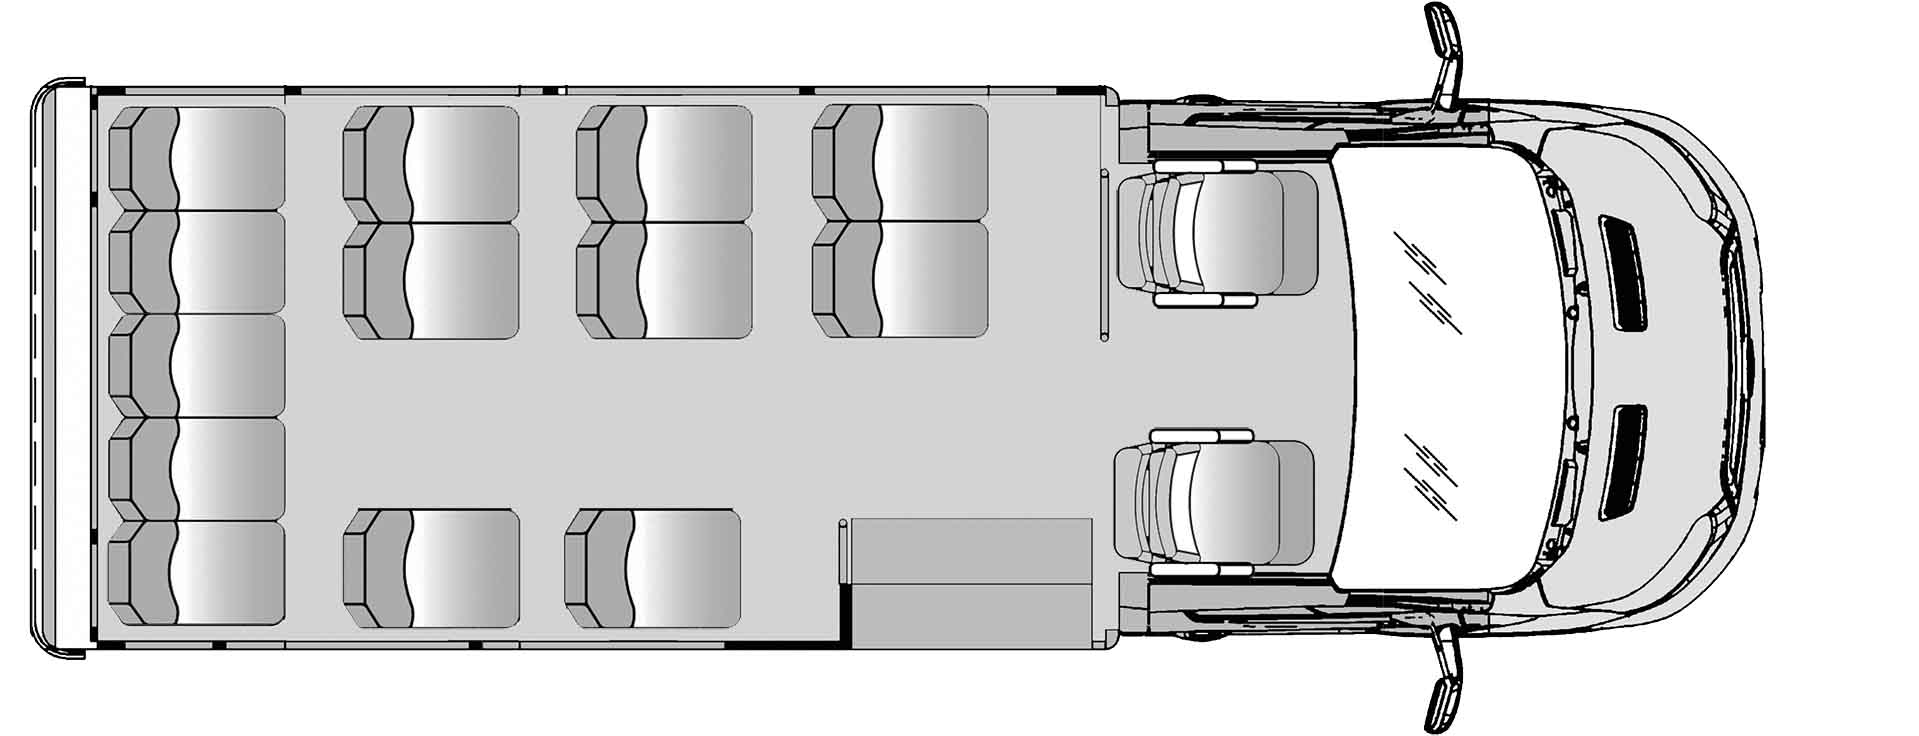 13 Passenger Plus Driver And Copilot Floorplan Image